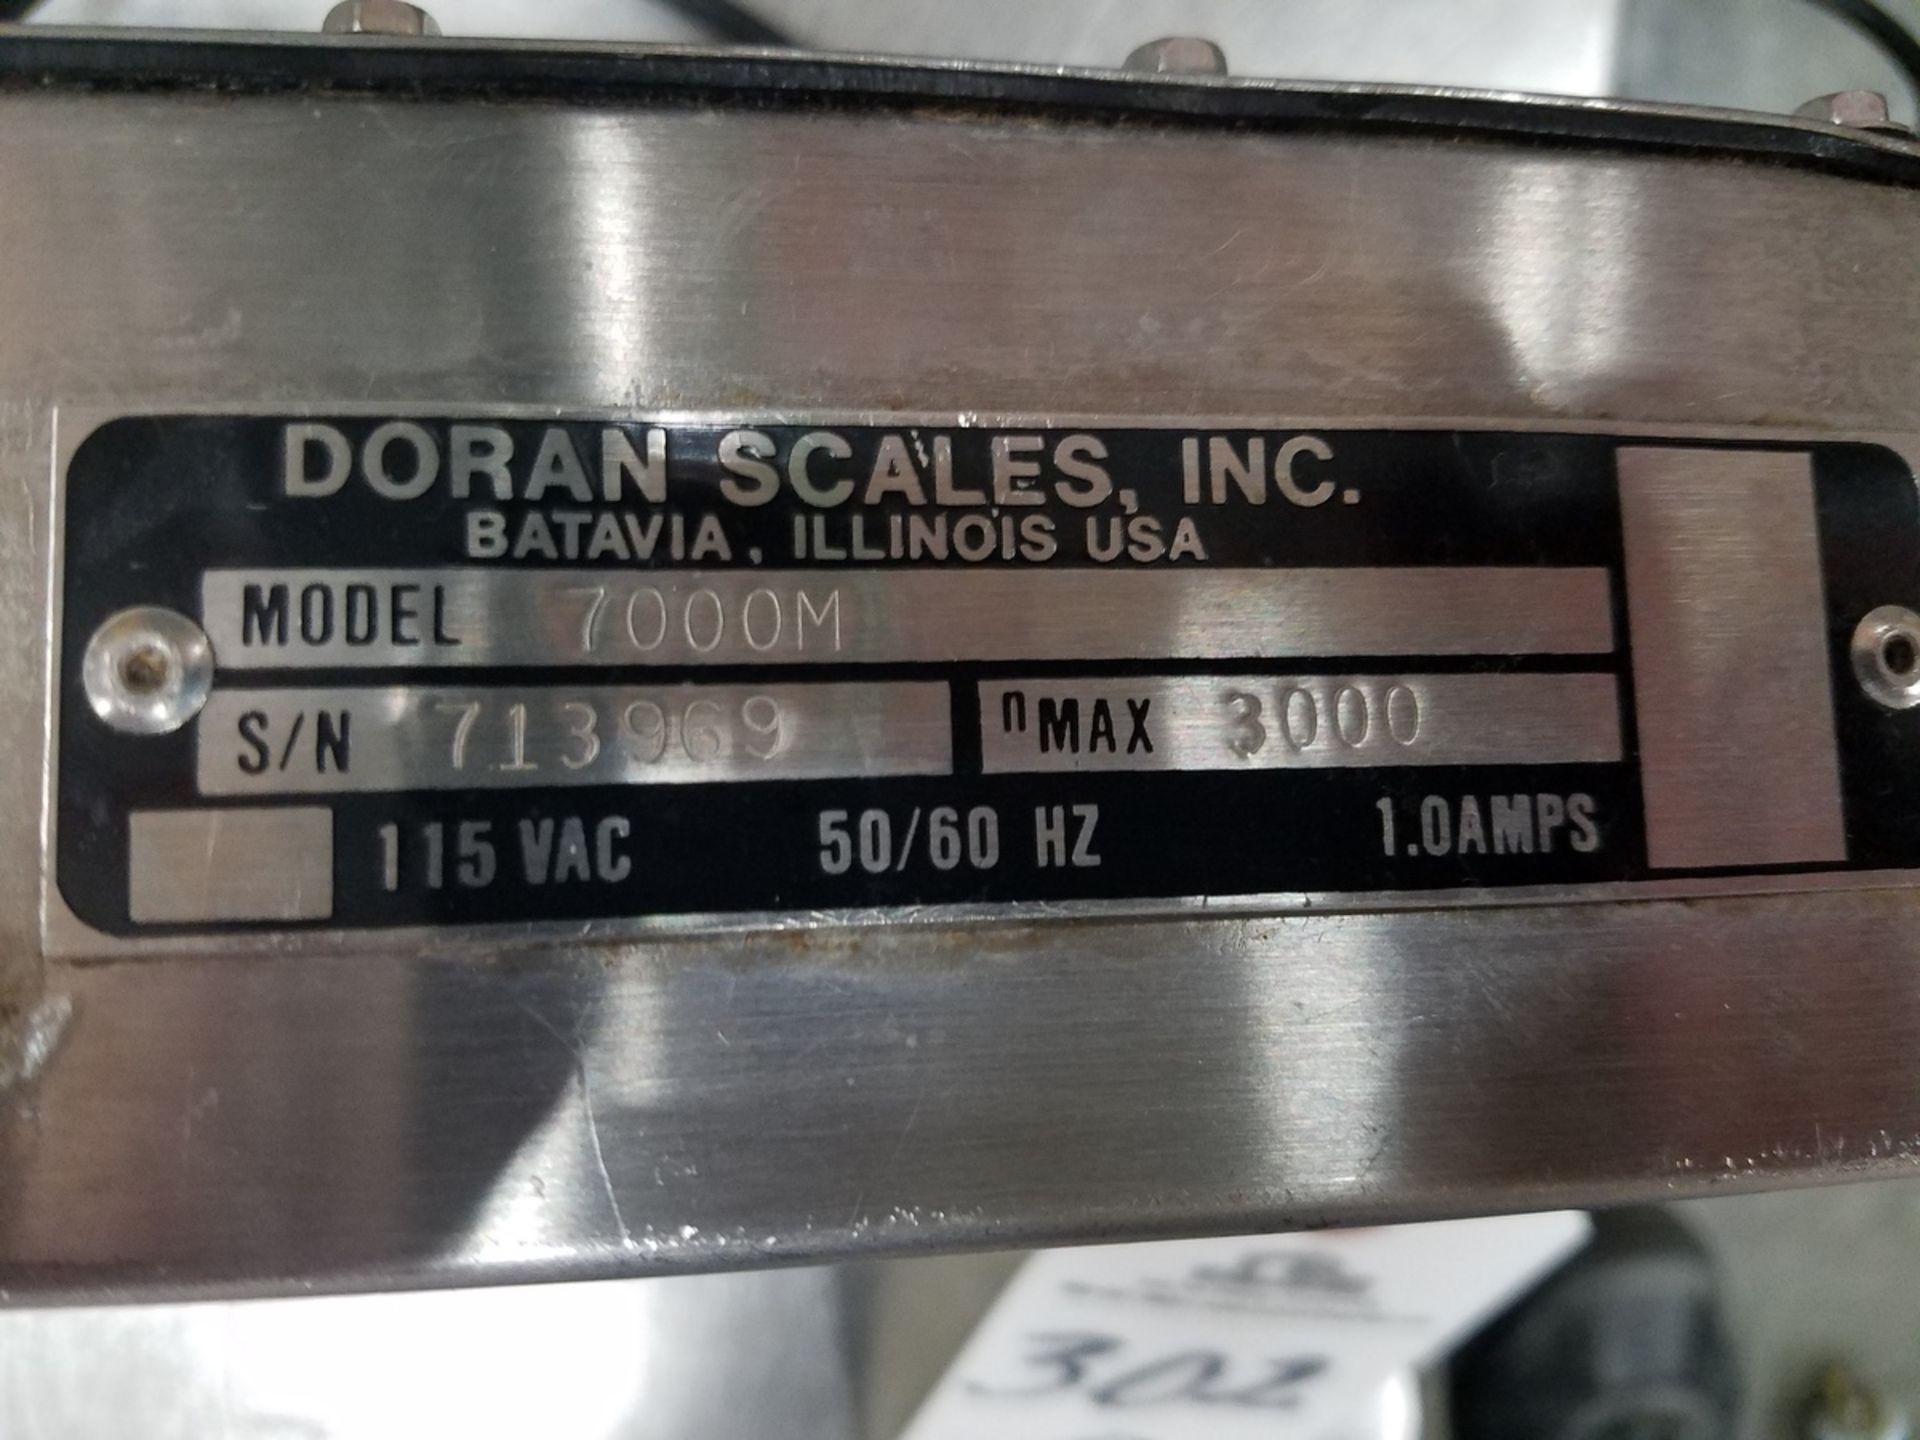 Doran Scale, M# 7000M, S/N 713969 | Rig Fee: $20 - Image 3 of 3